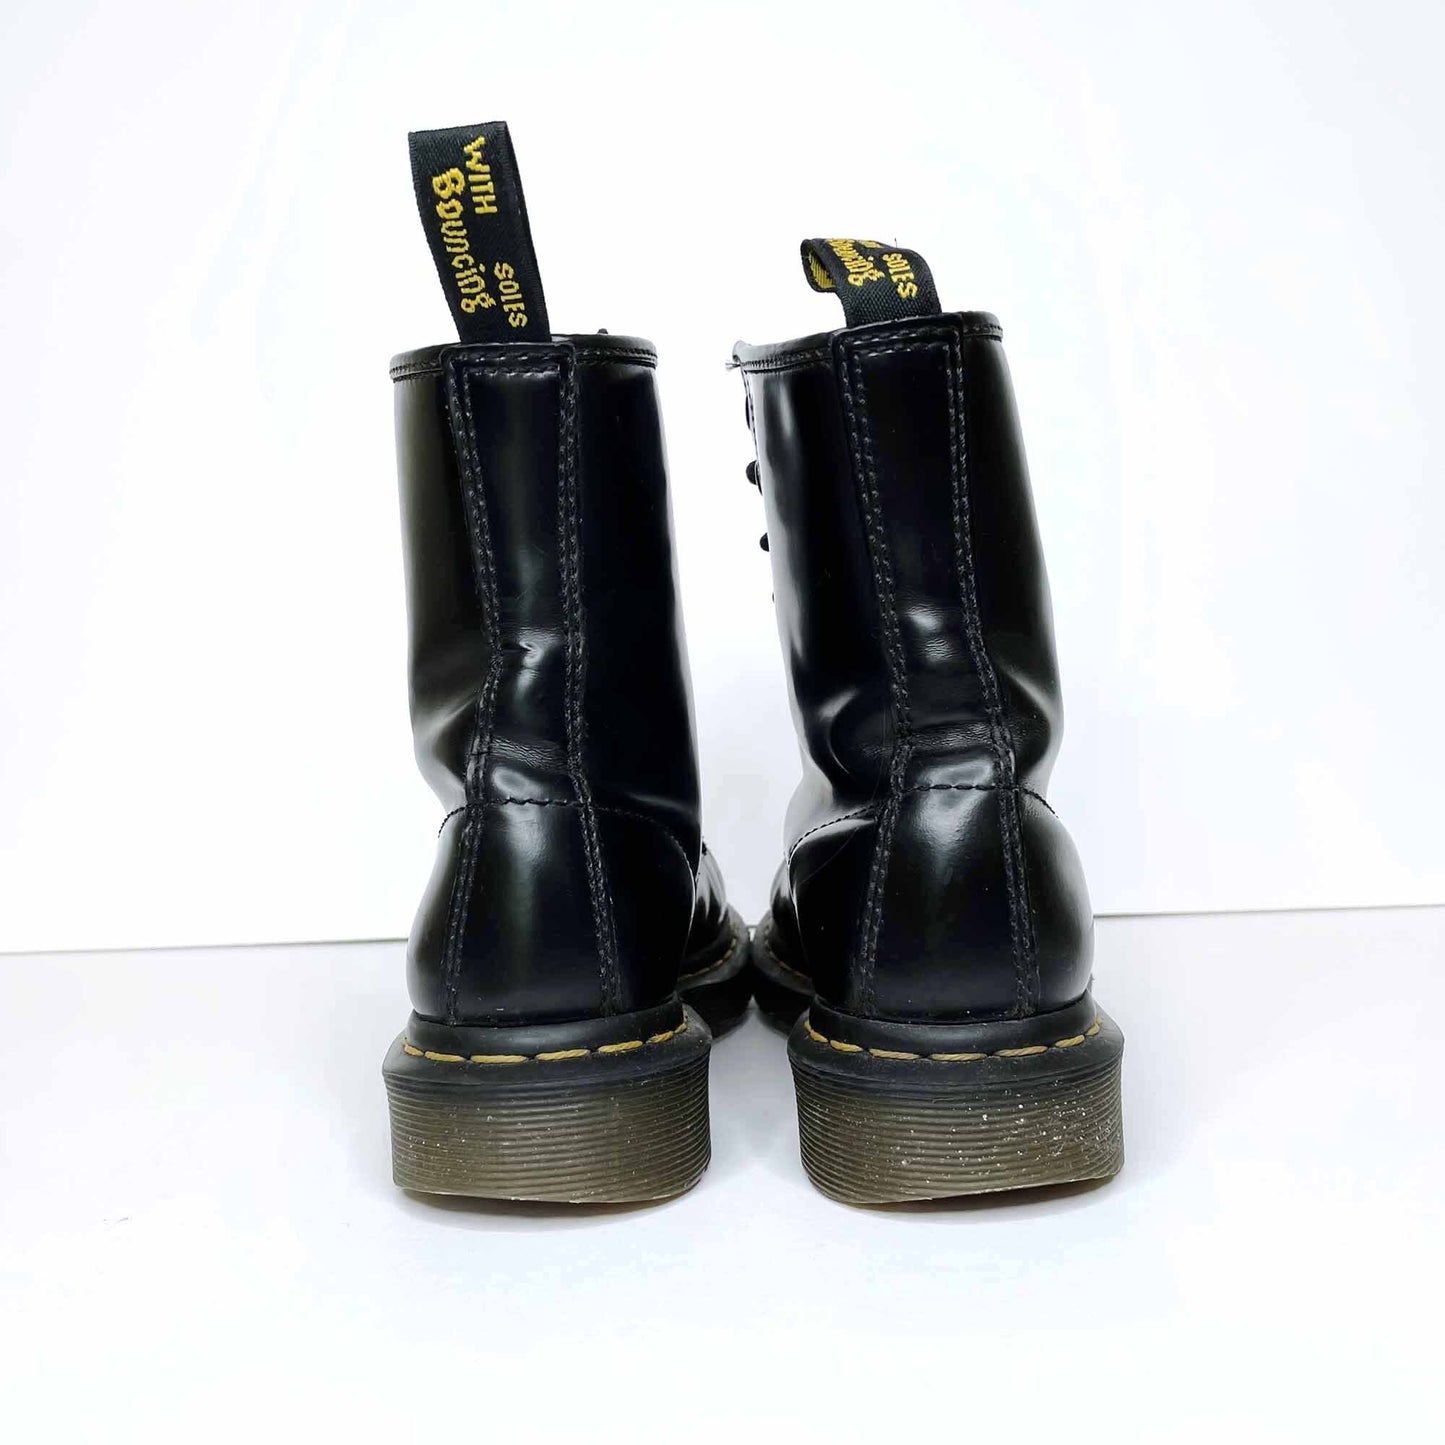 doc martens classic lace-up boots - the original - size 6